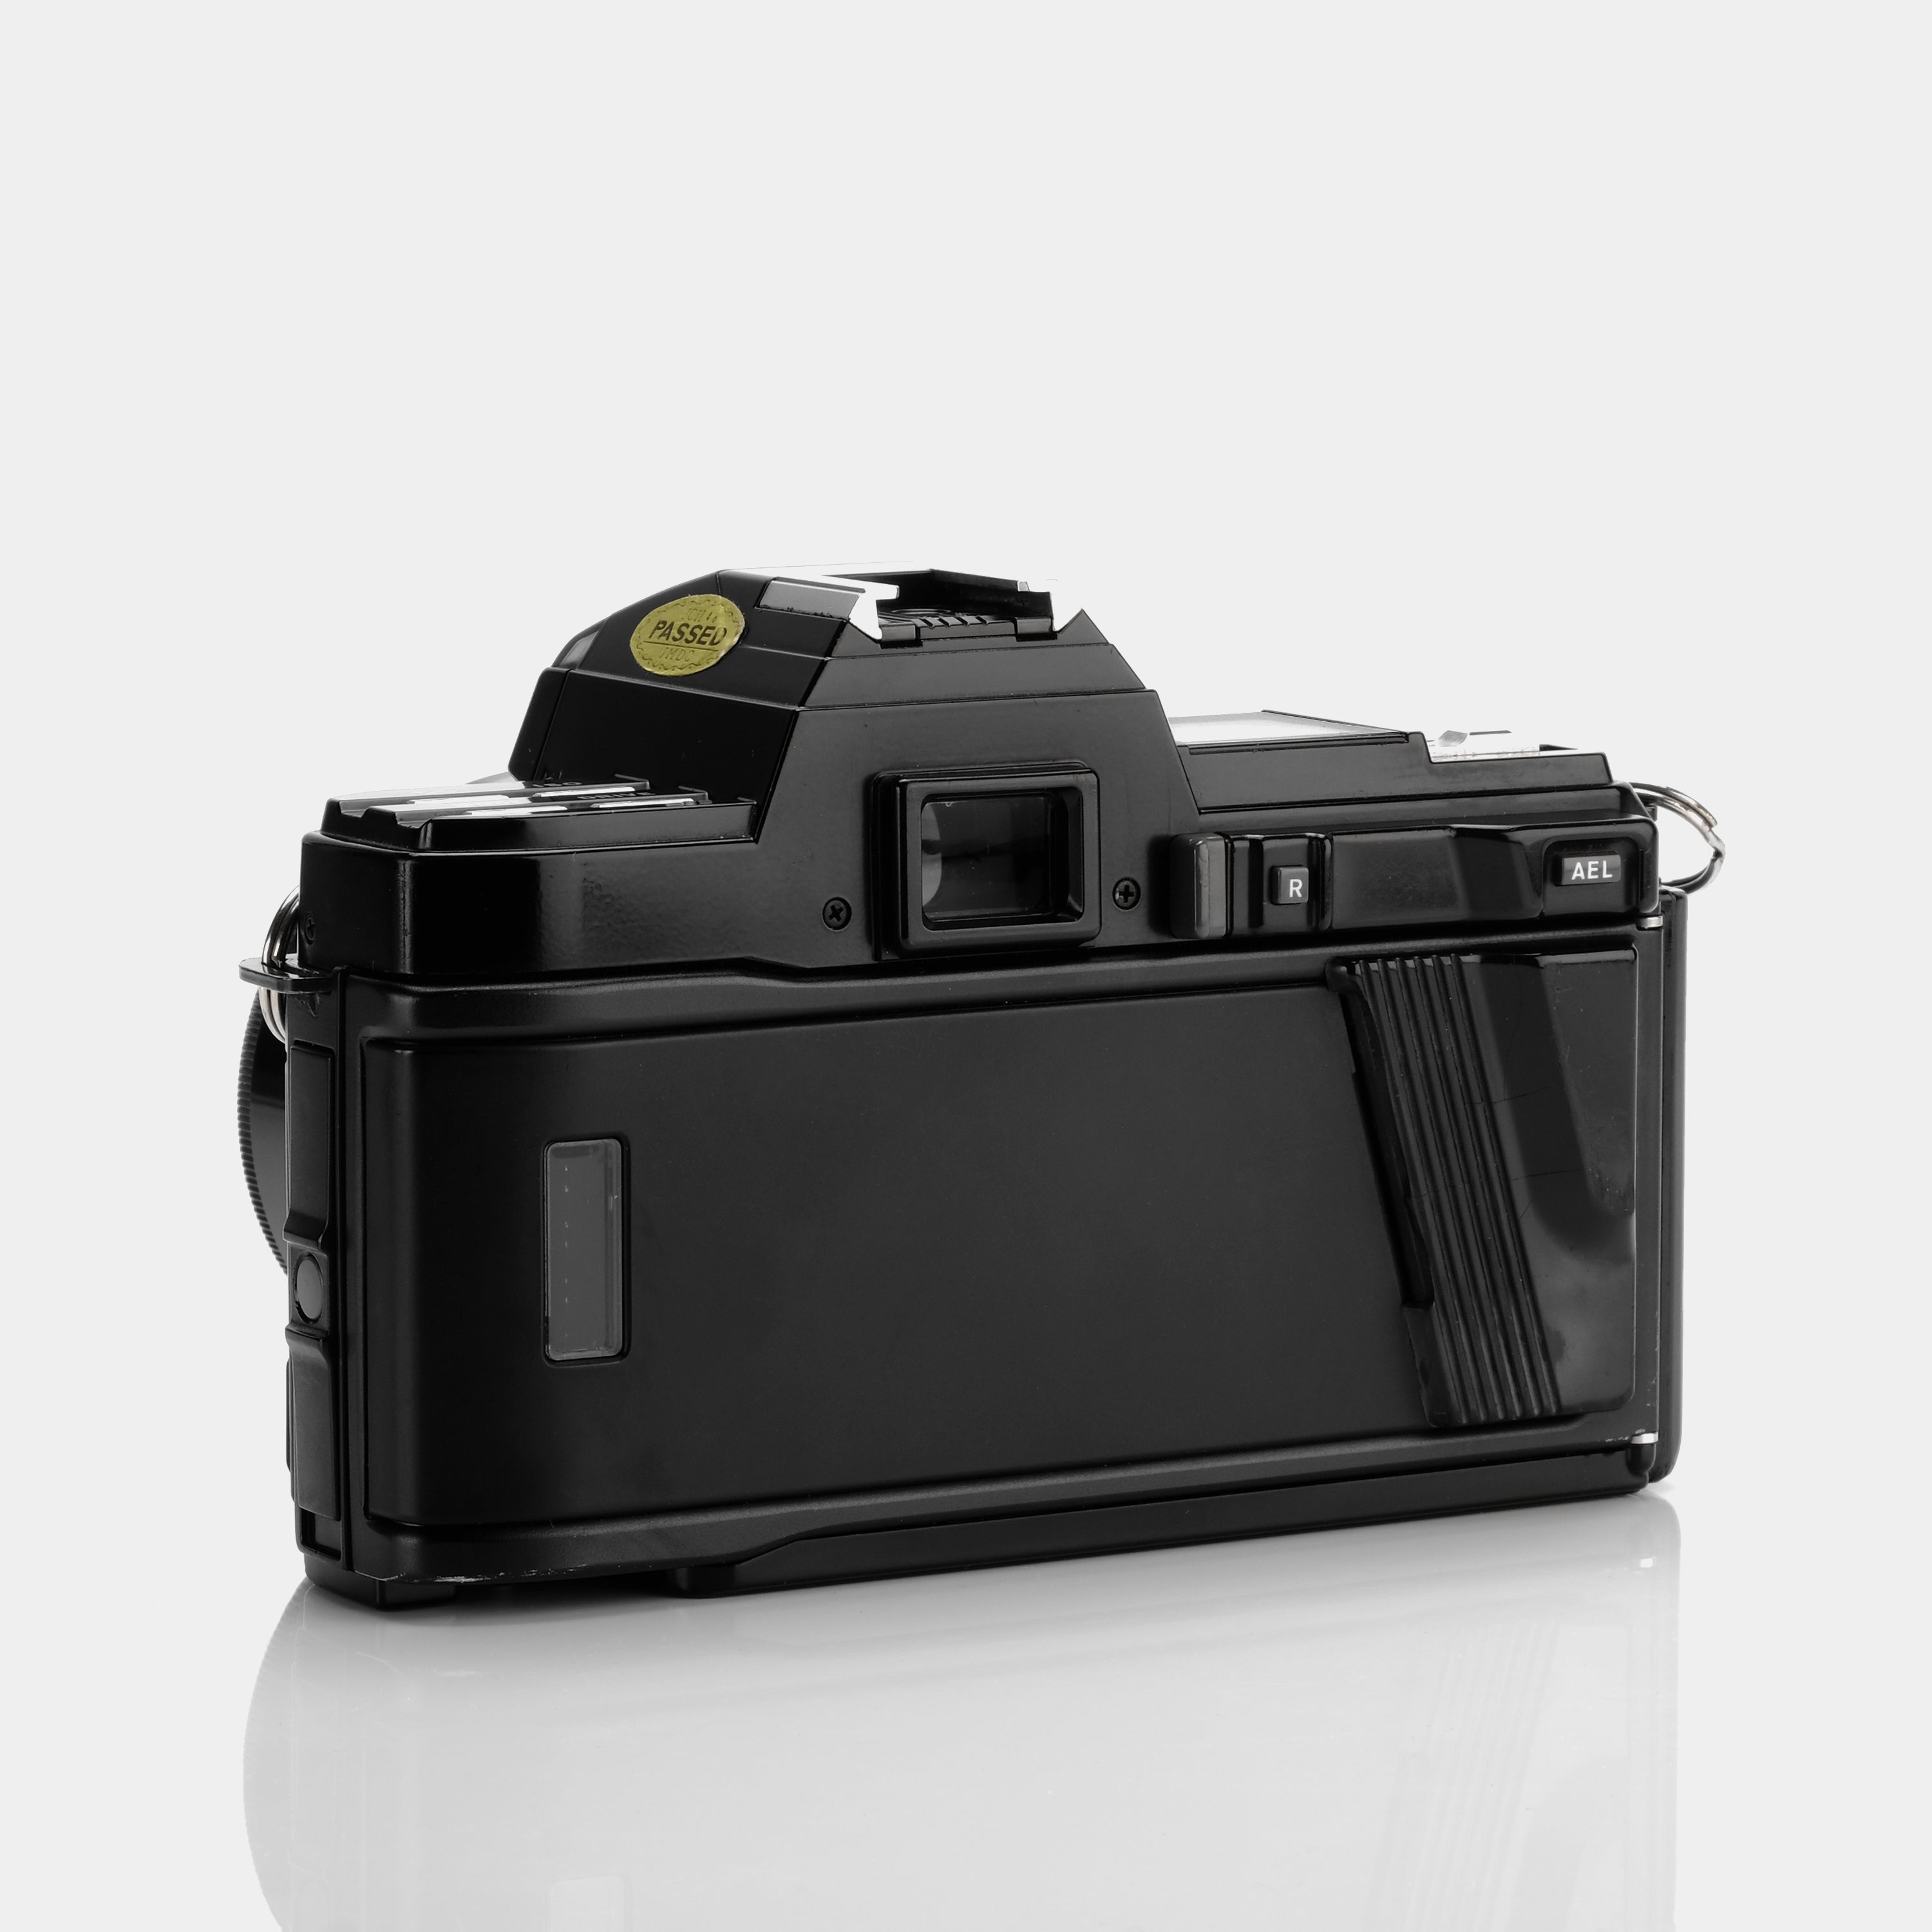 Minolta Maxxum 7000 SLR 35mm Film Camera With Lenses